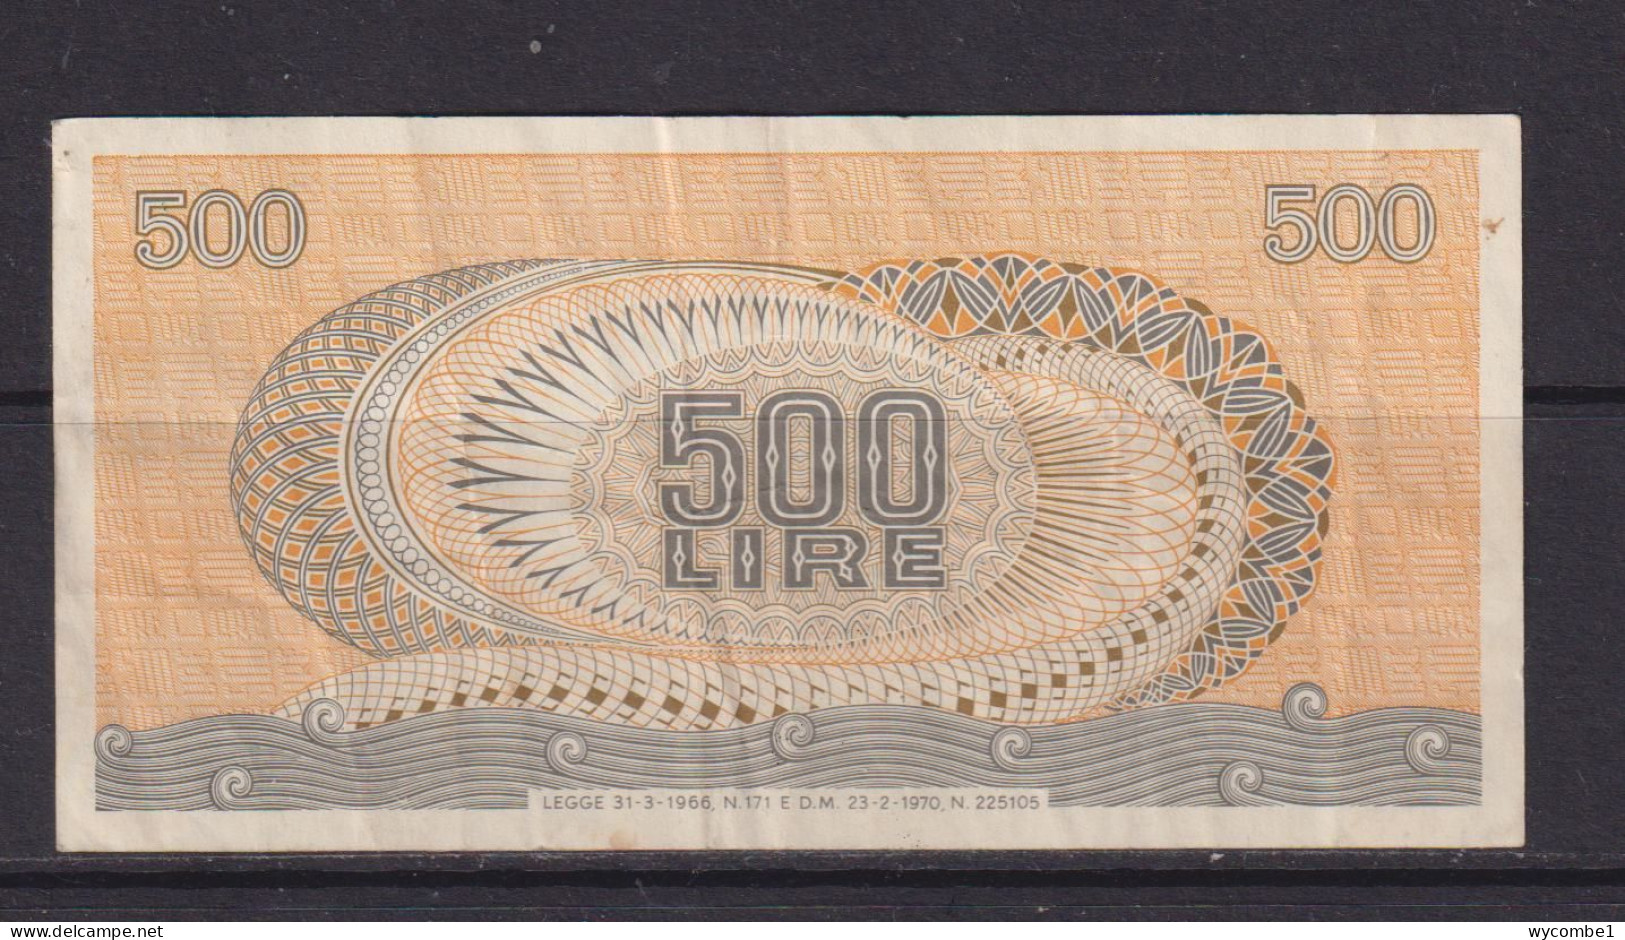 ITALY - 1967 500 Lira Circulated Banknote - 500 Liras